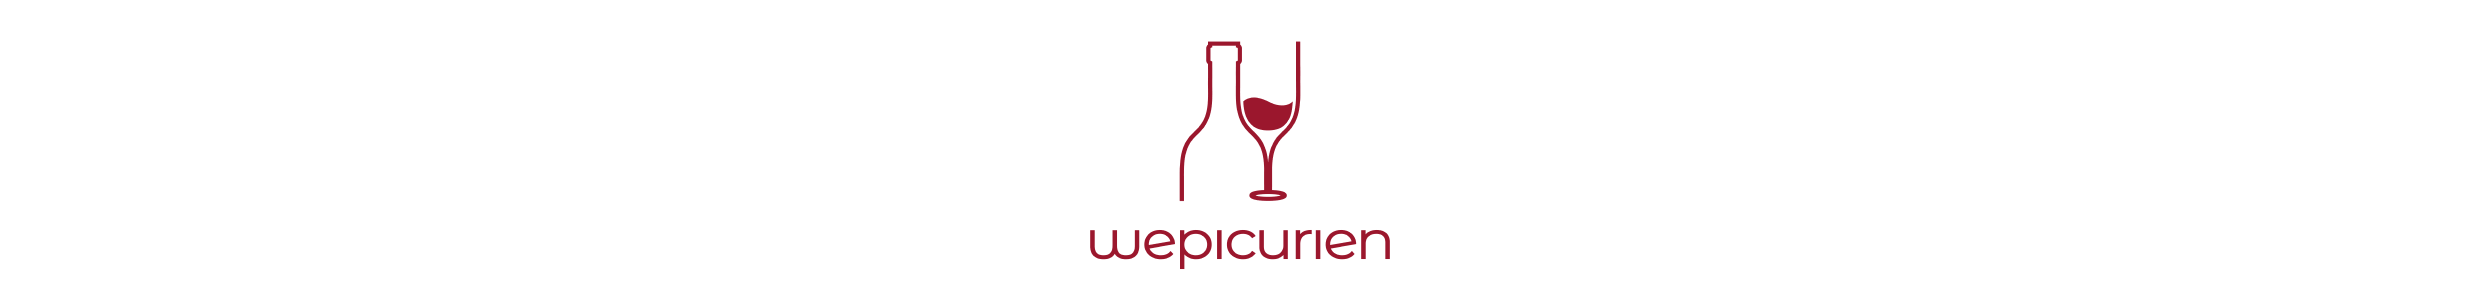 WEPICURIEN logo